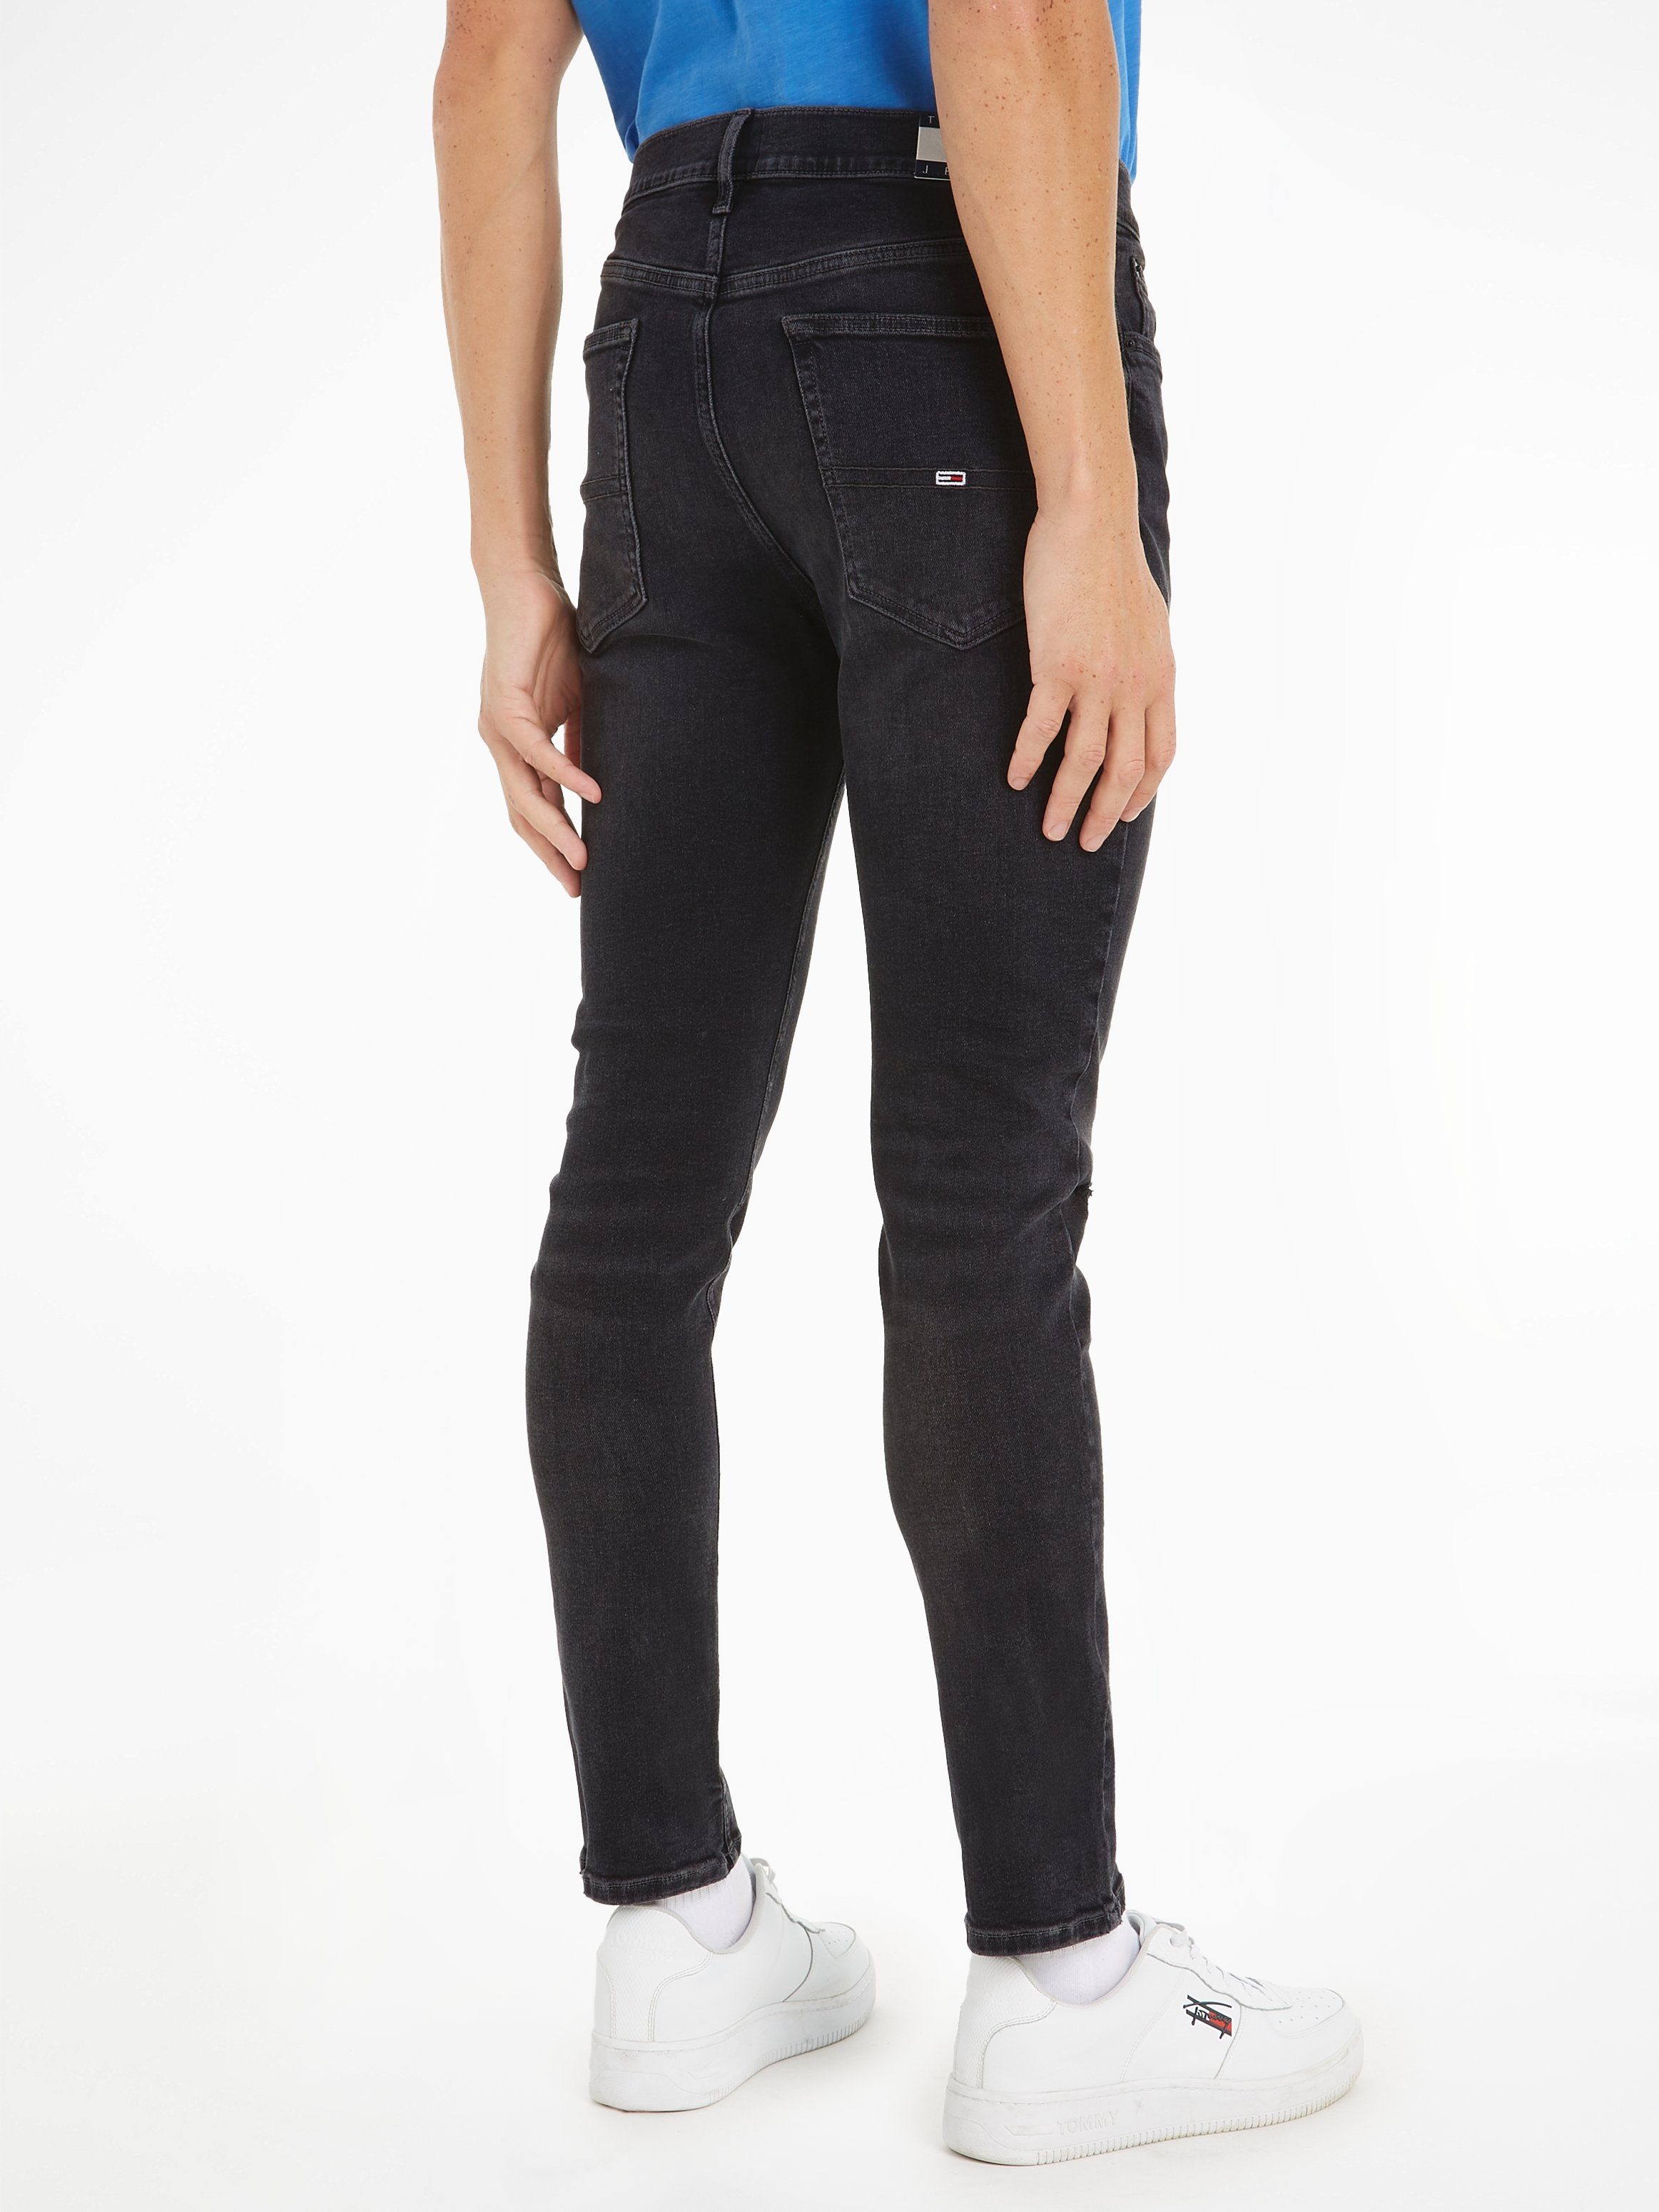 SIMON SKNY Denim im Tommy Black 5-Pocket-Style Jeans Skinny-fit-Jeans